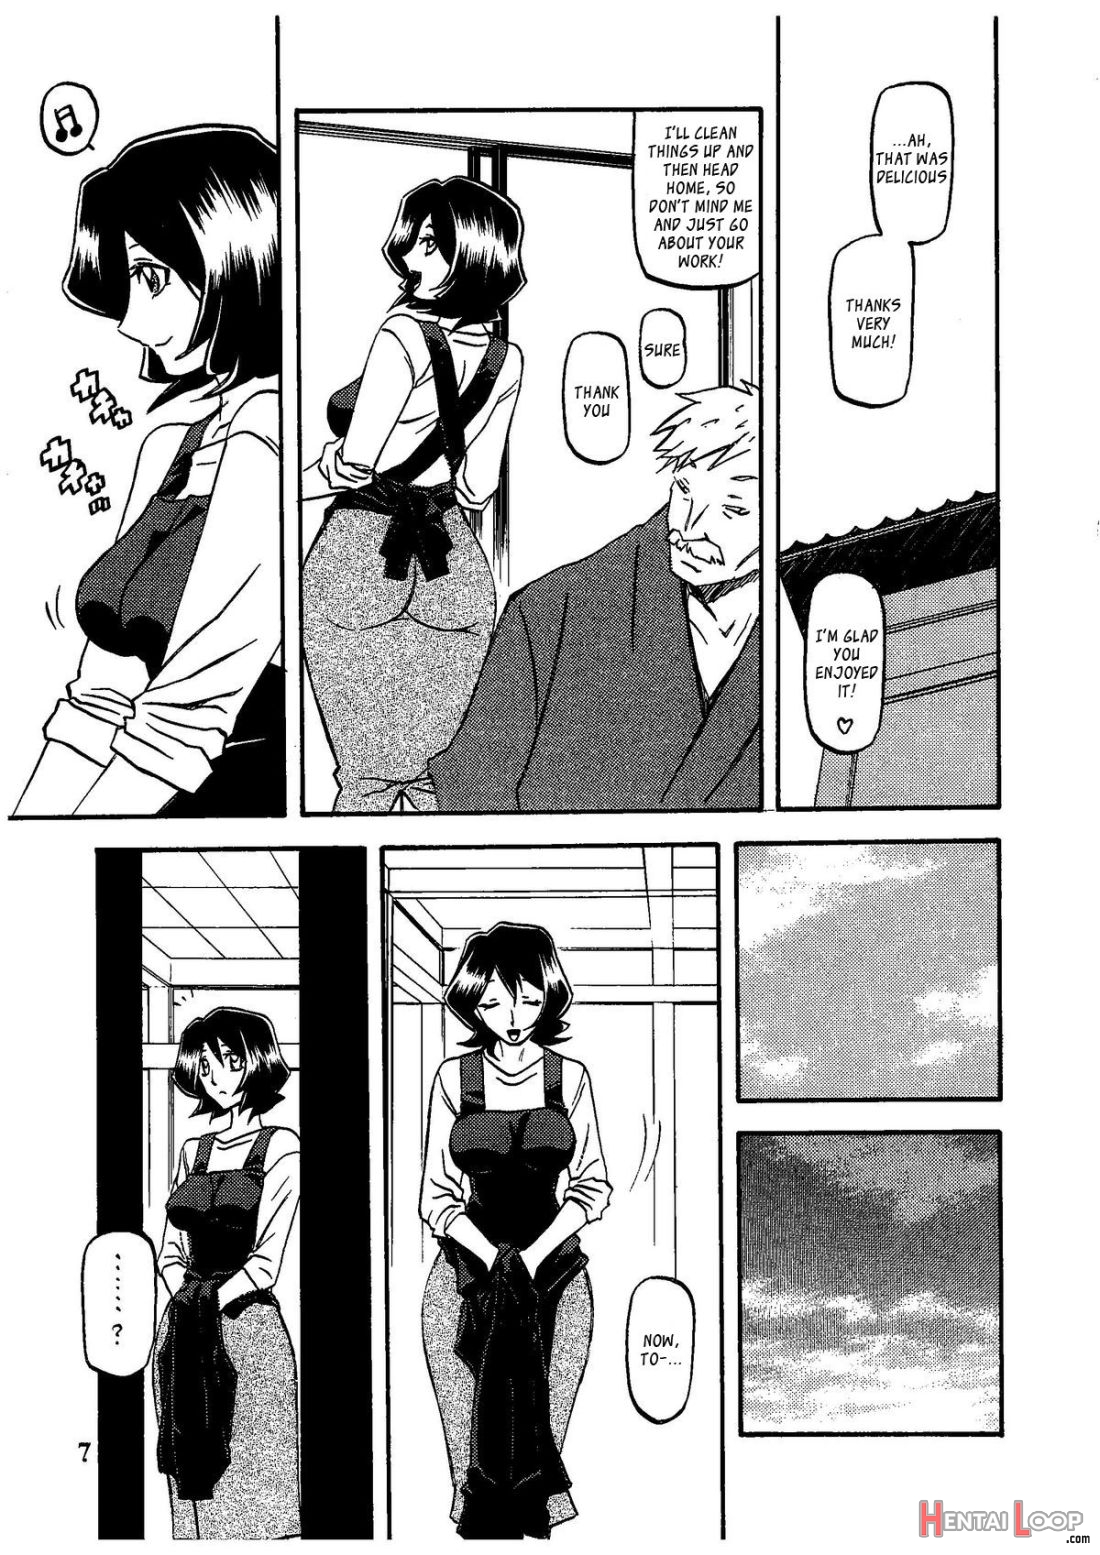 Saneishou -sayoko page 7